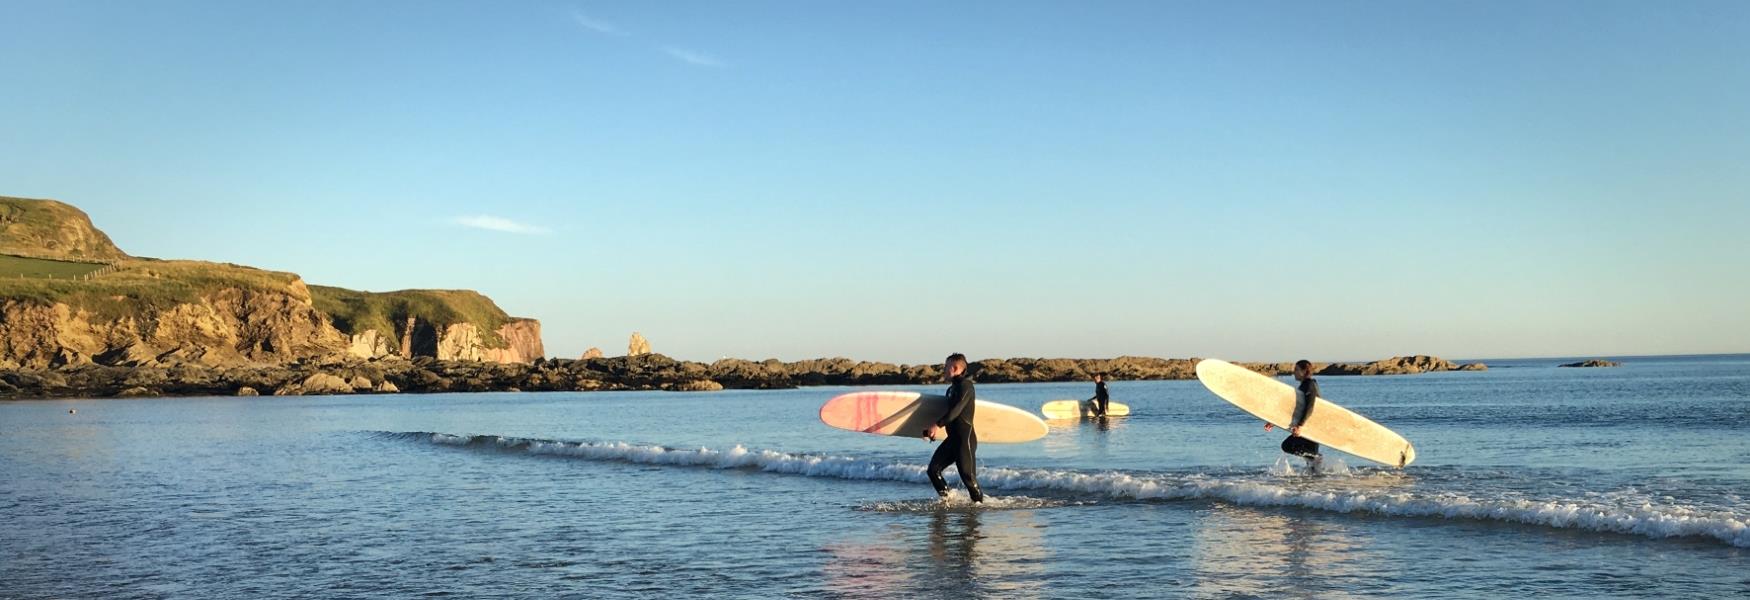 Surfers at Bantham Beach